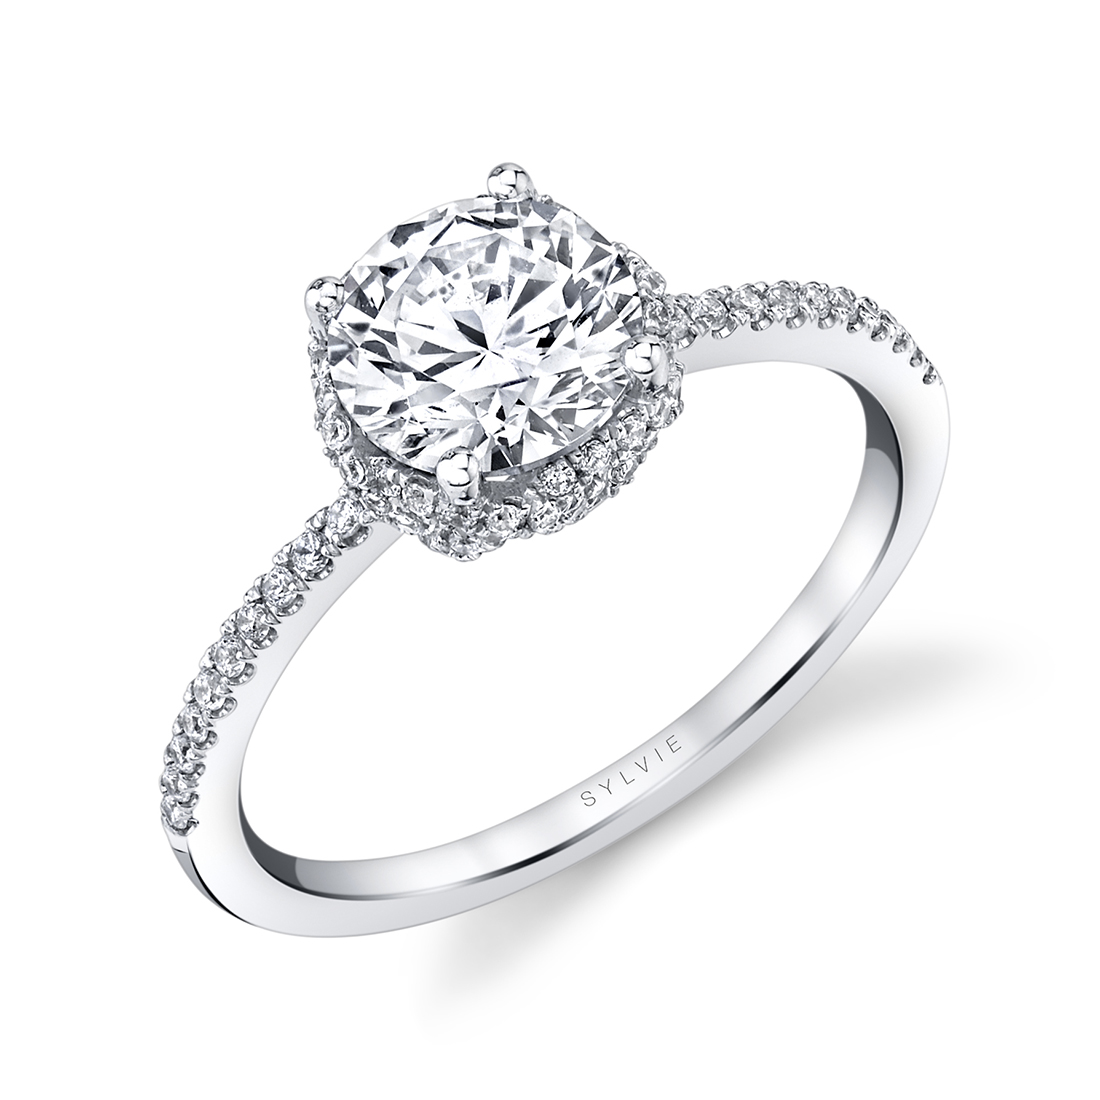 5.19ct Round Brilliant Cut Diamond Engagement Ring | Brilliant cut diamond  engagement ring, Round brilliant cut engagement ring, Diamond solitaire engagement  ring